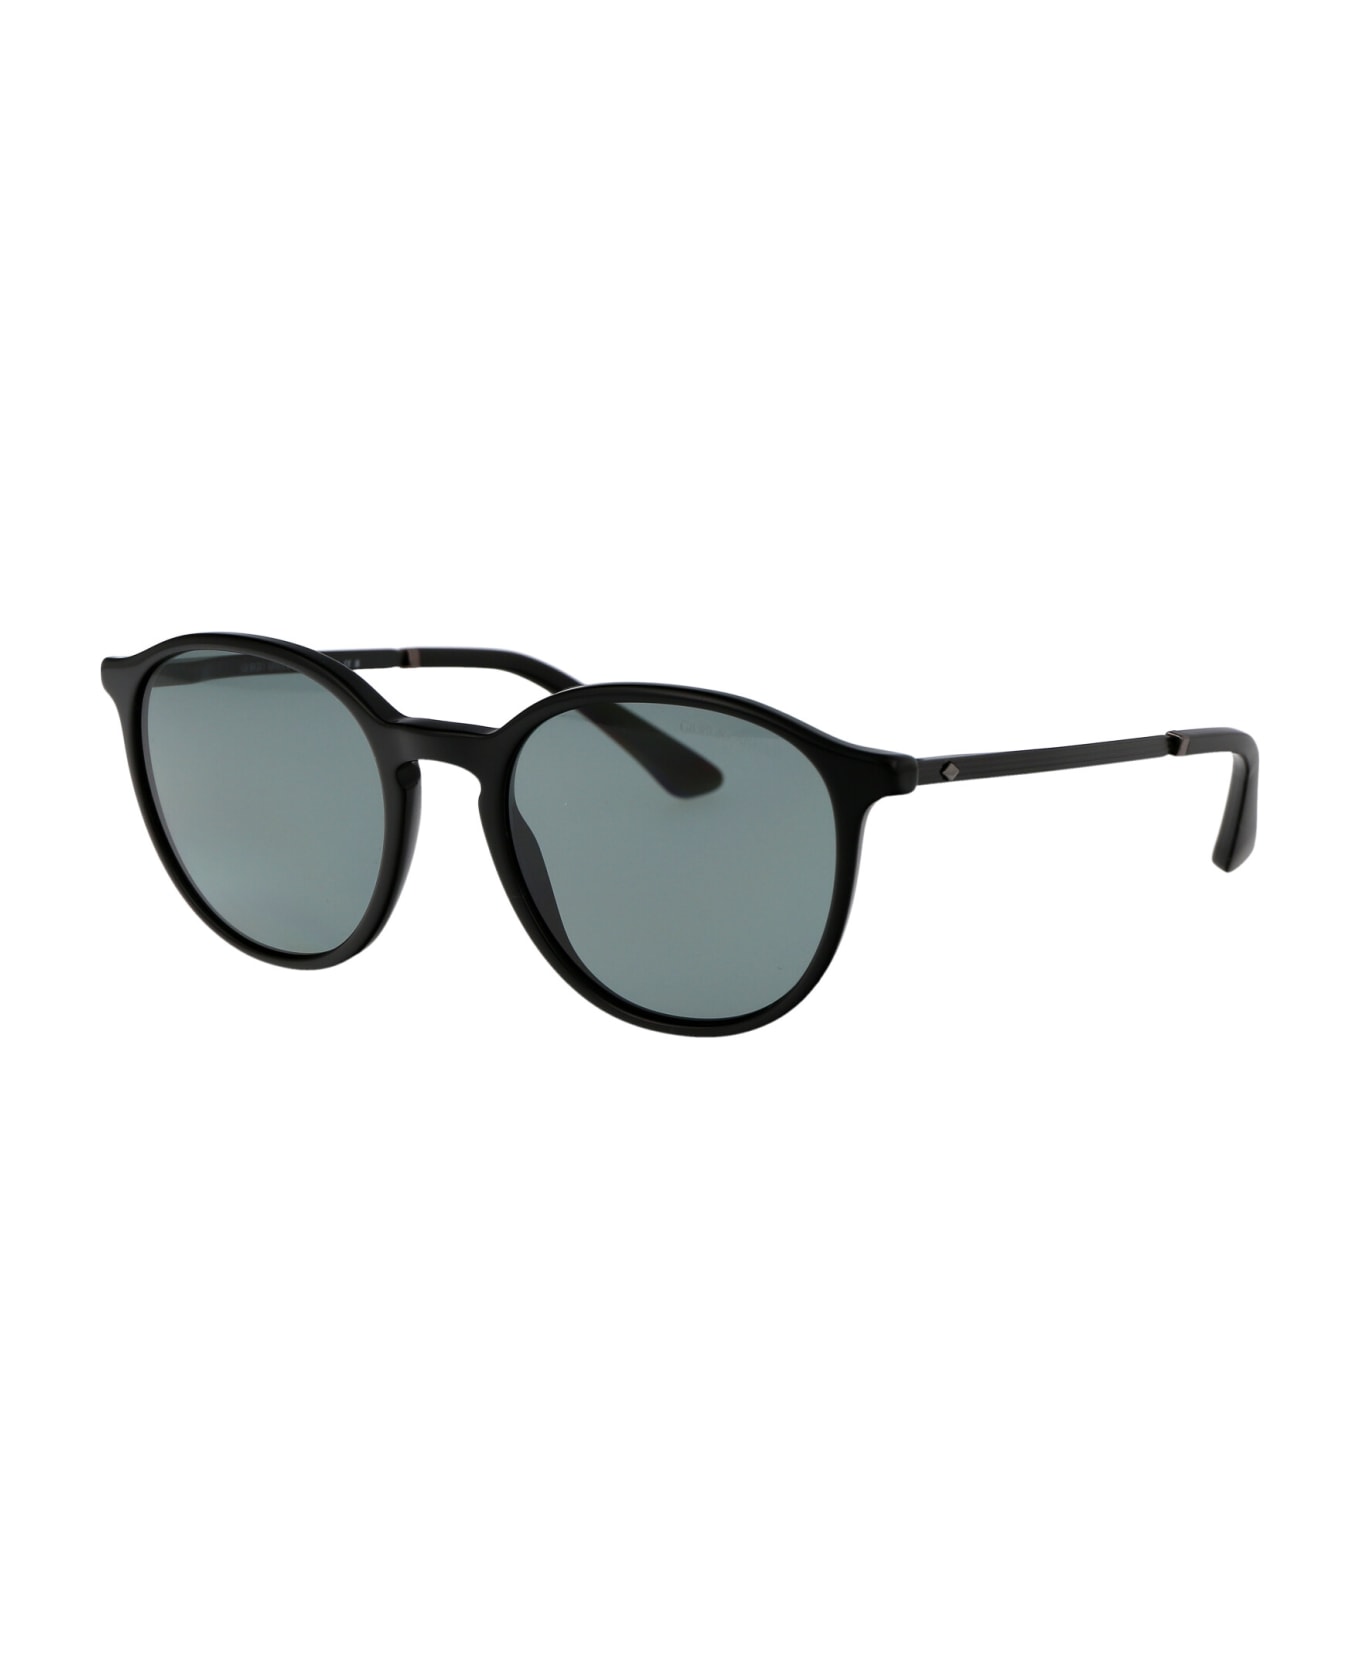 Giorgio Armani 0ar8196 Sunglasses - 5001/1 Black